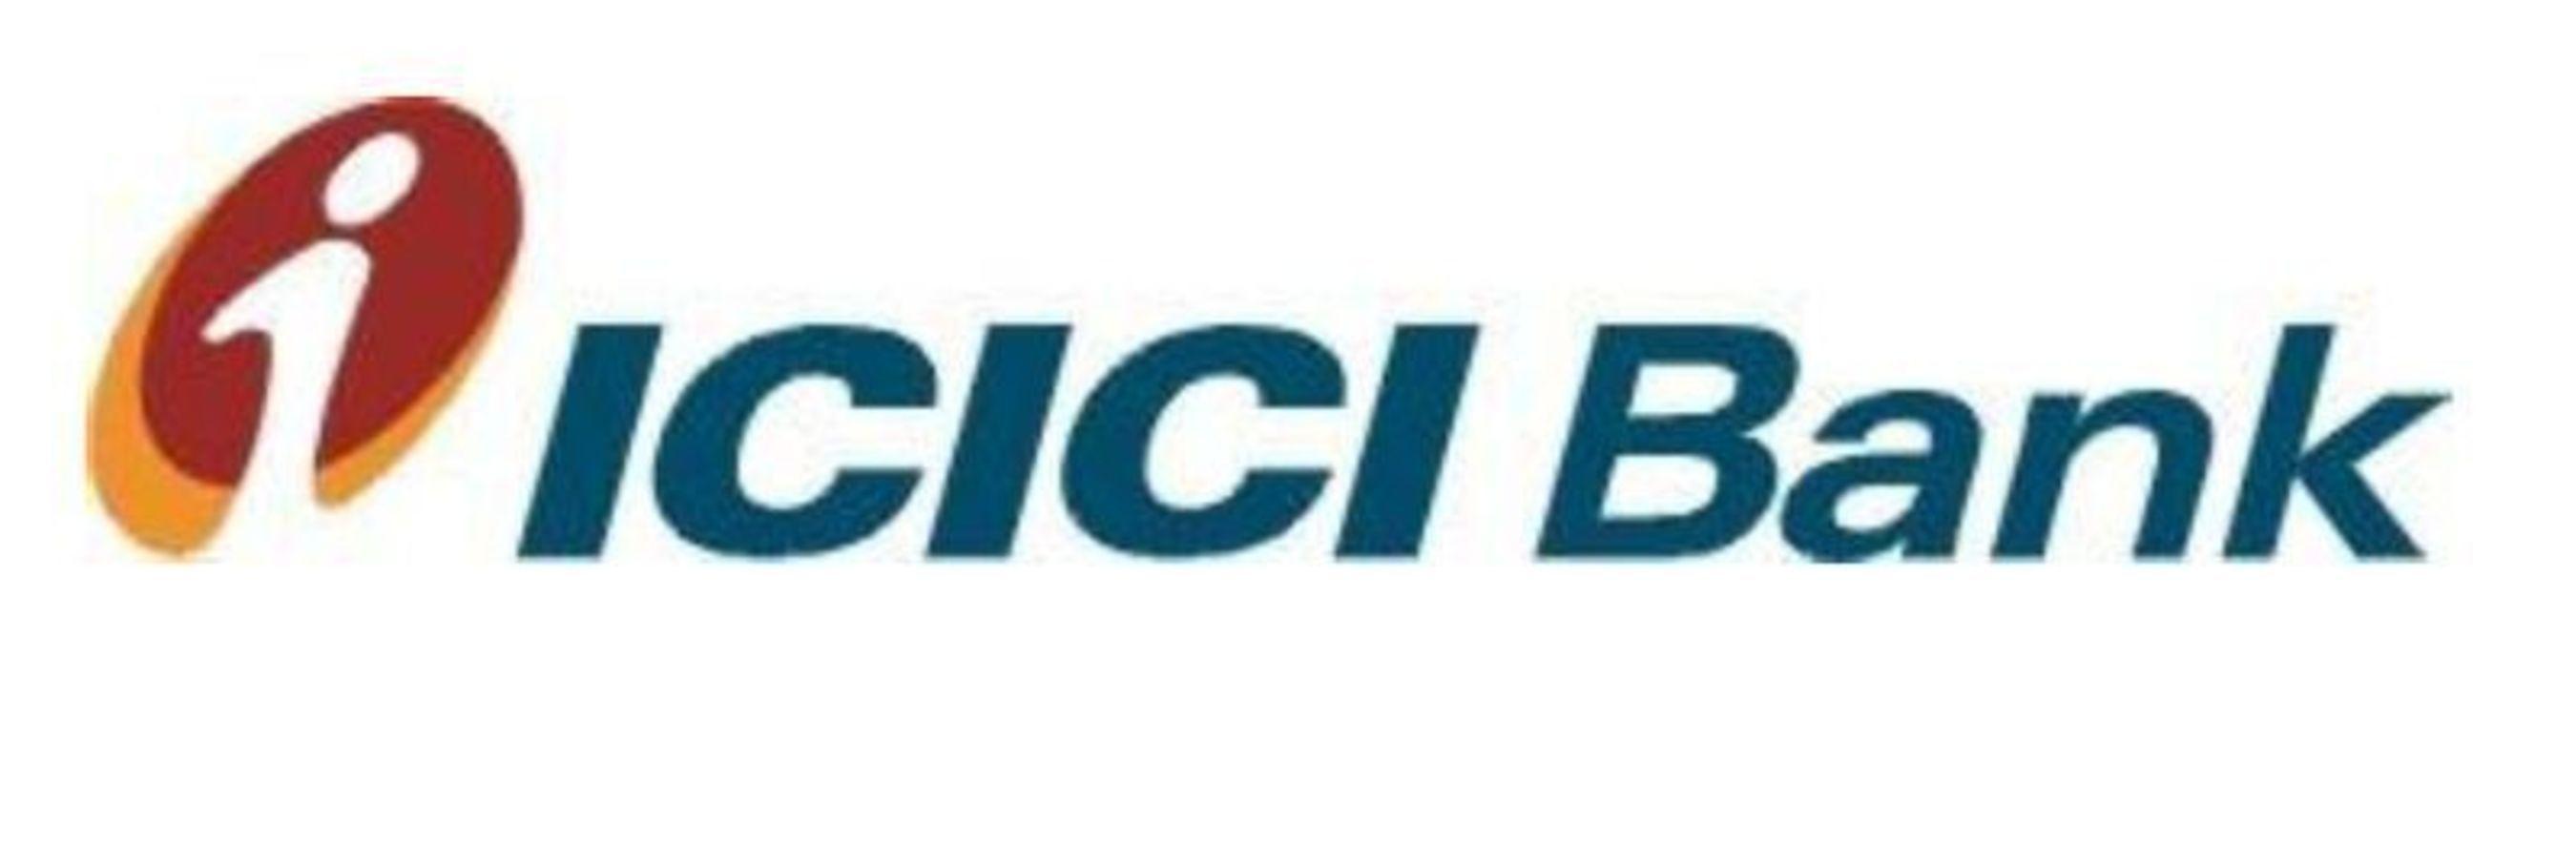 ICICI Bank Logo - ICICI Bank Ltd Launches 'Video Banking